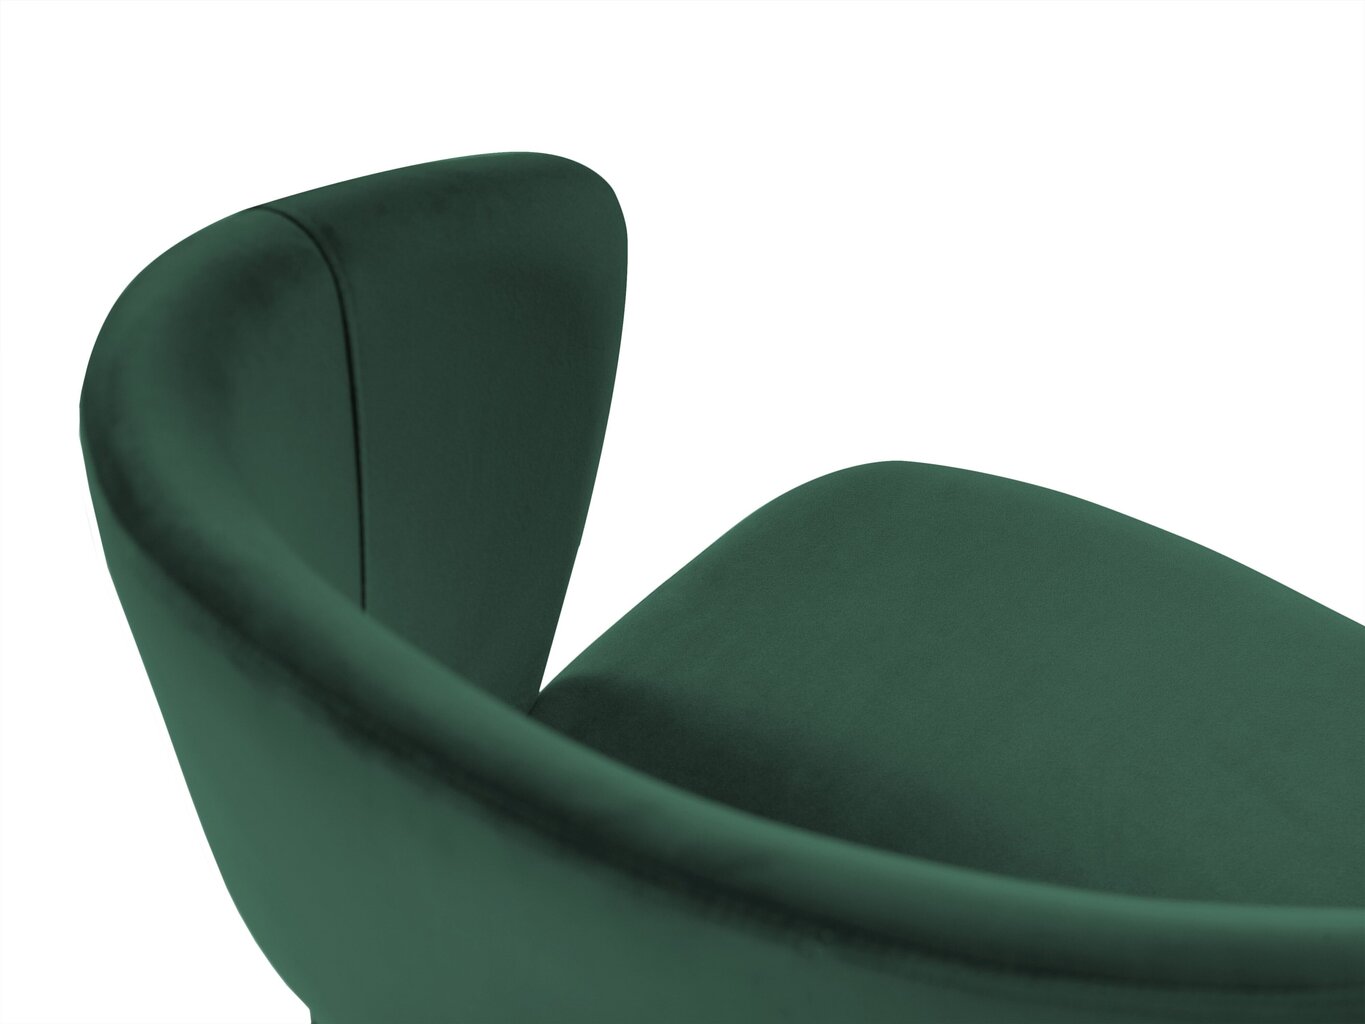 4-u krēslu komplekts Windsor and Co Elpis, tumši zaļš цена и информация | Virtuves un ēdamistabas krēsli | 220.lv